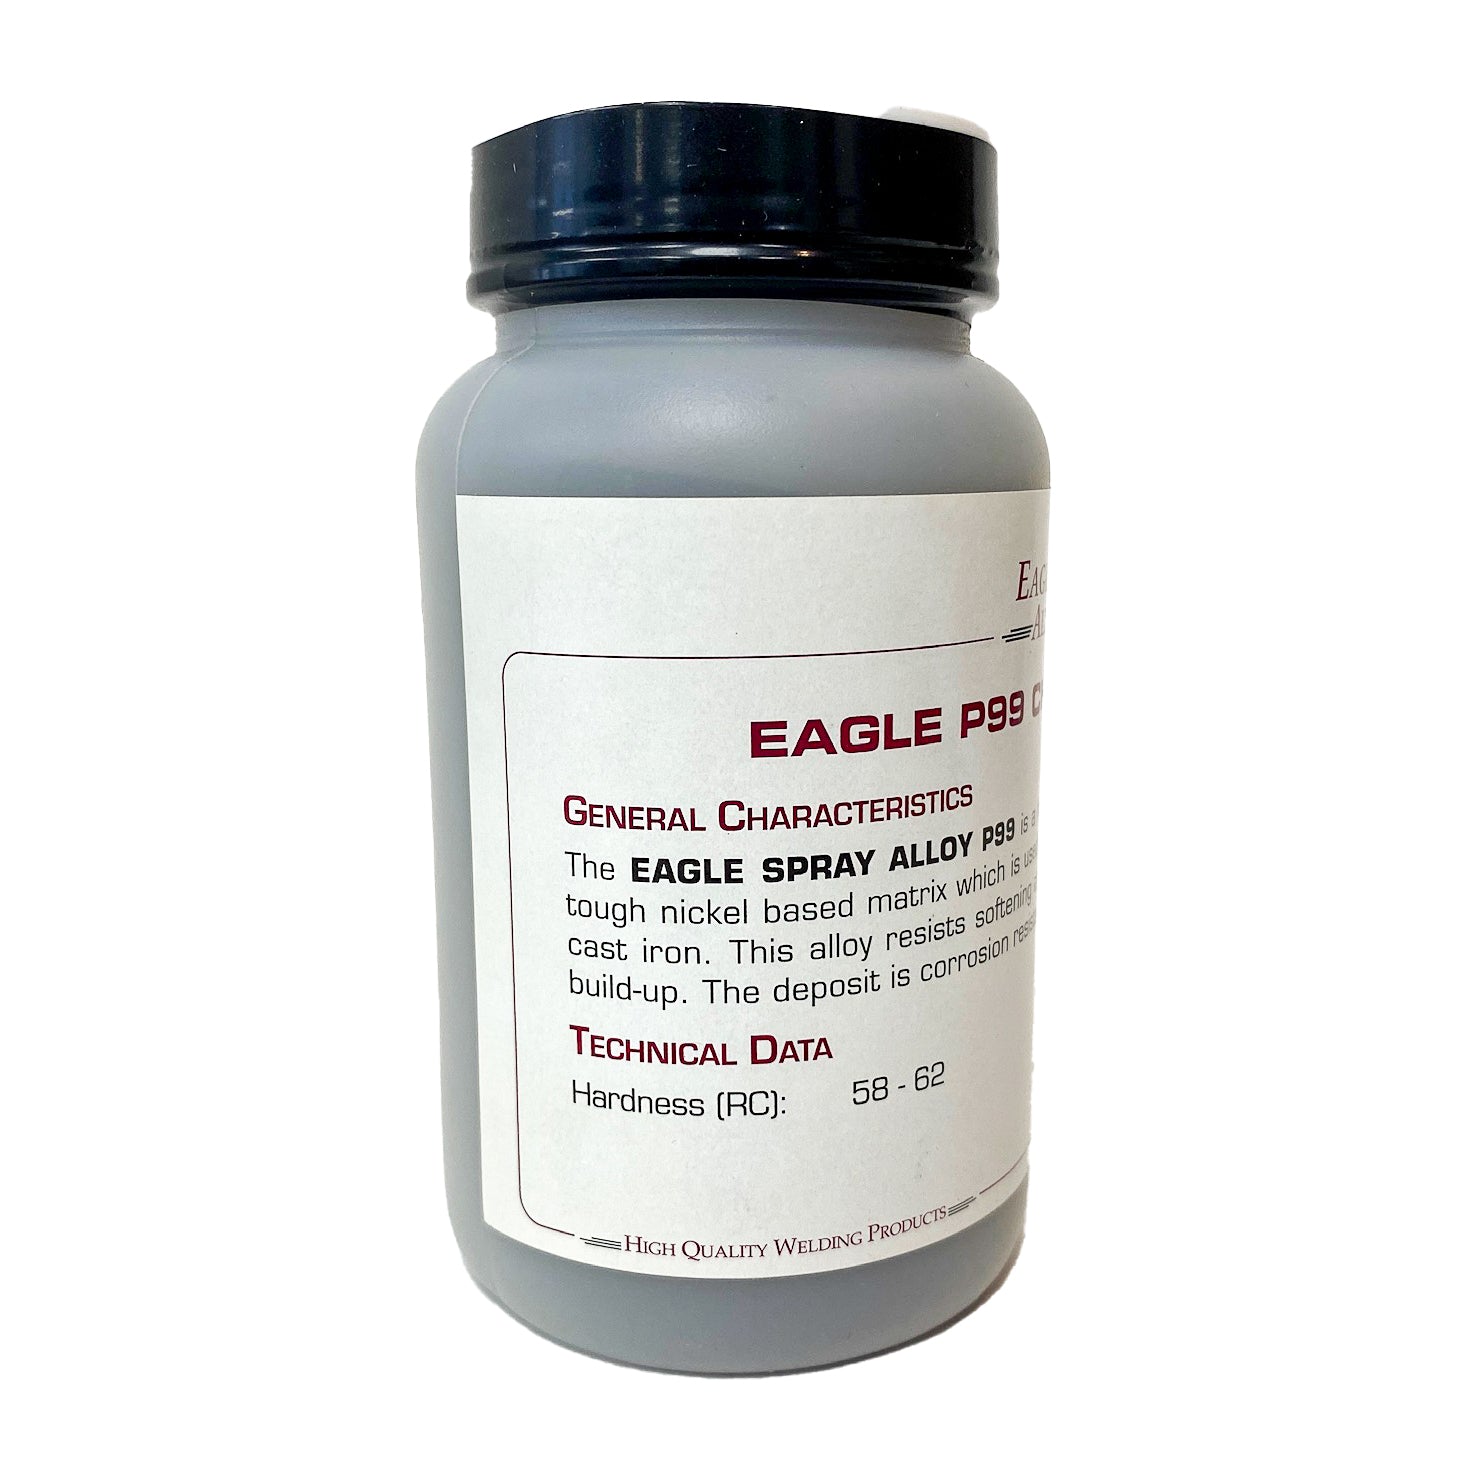 EAGLE P99 SPRAY ALLOY POWDER | A High Quality Chrome Boron